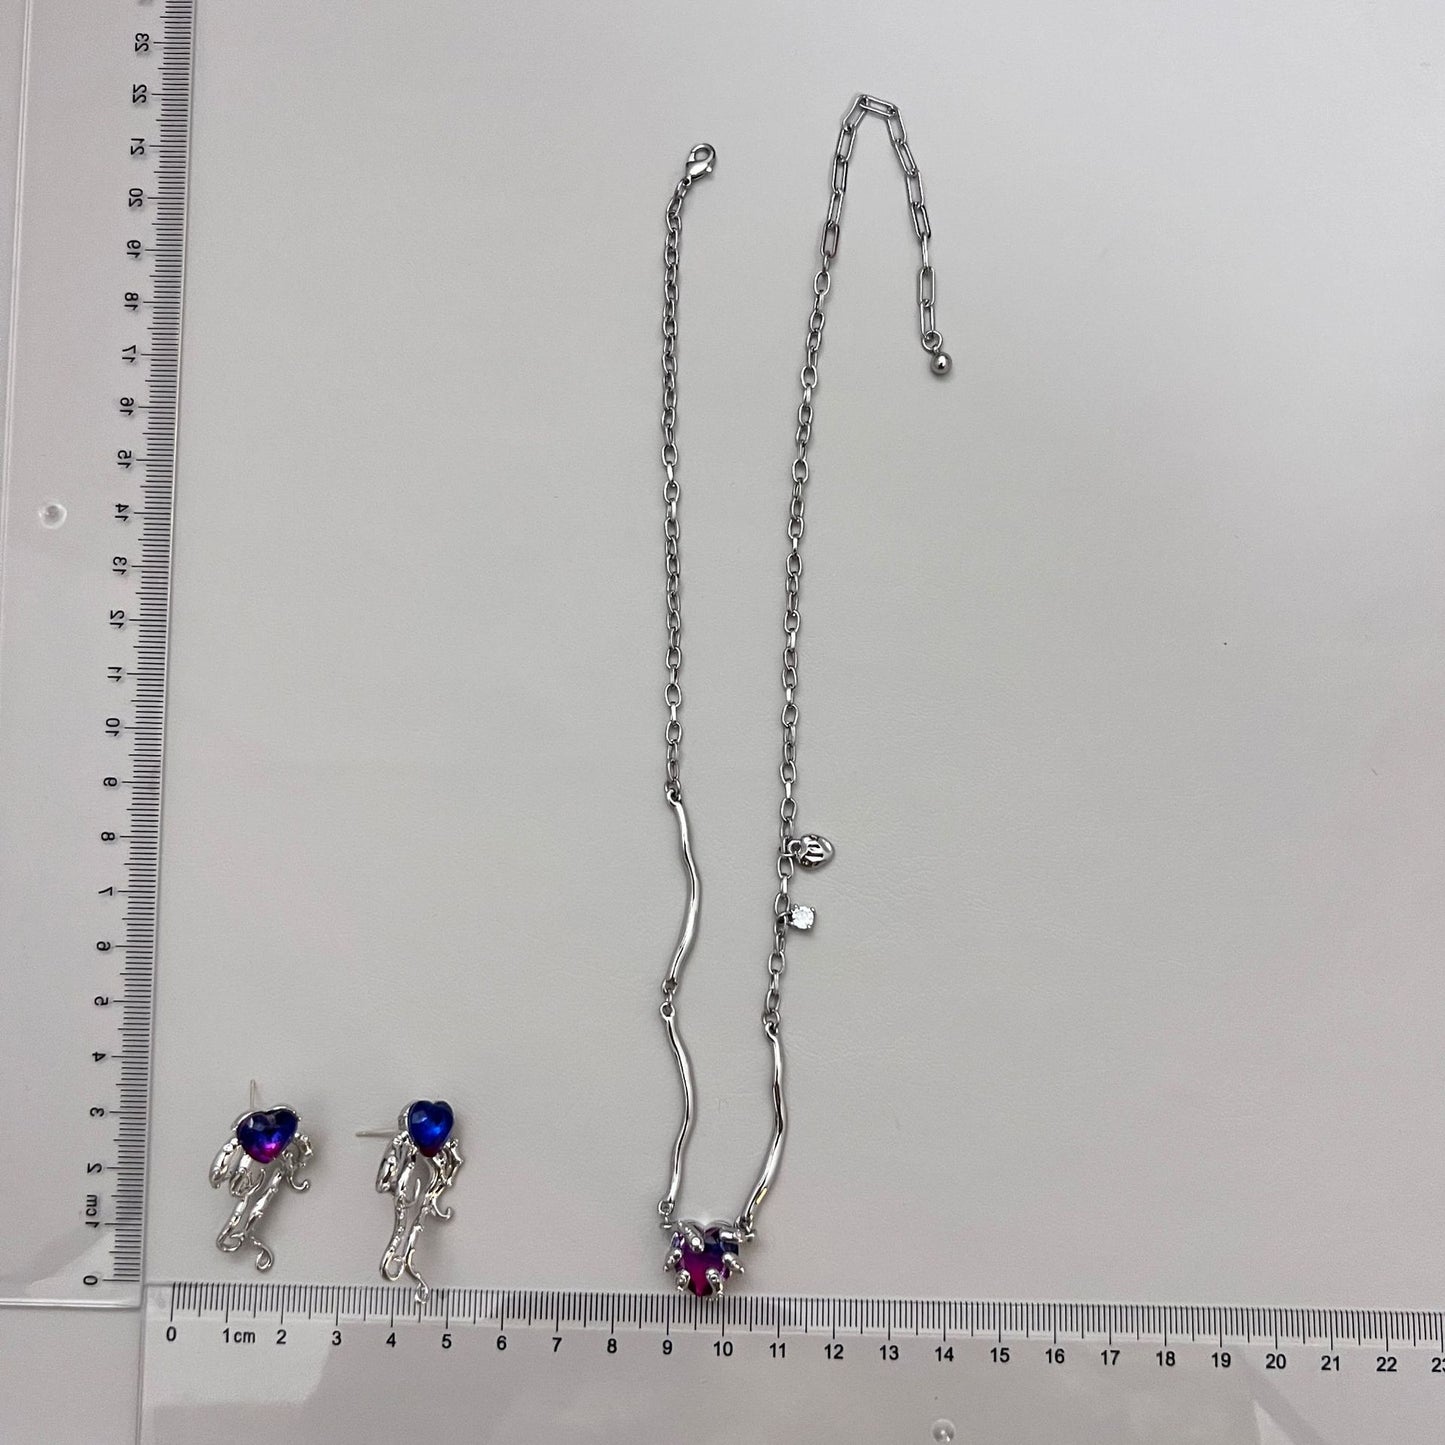 Original sweet cool hot girl necklace purple twist love earrings ins hip-hop niche design sense of seniority